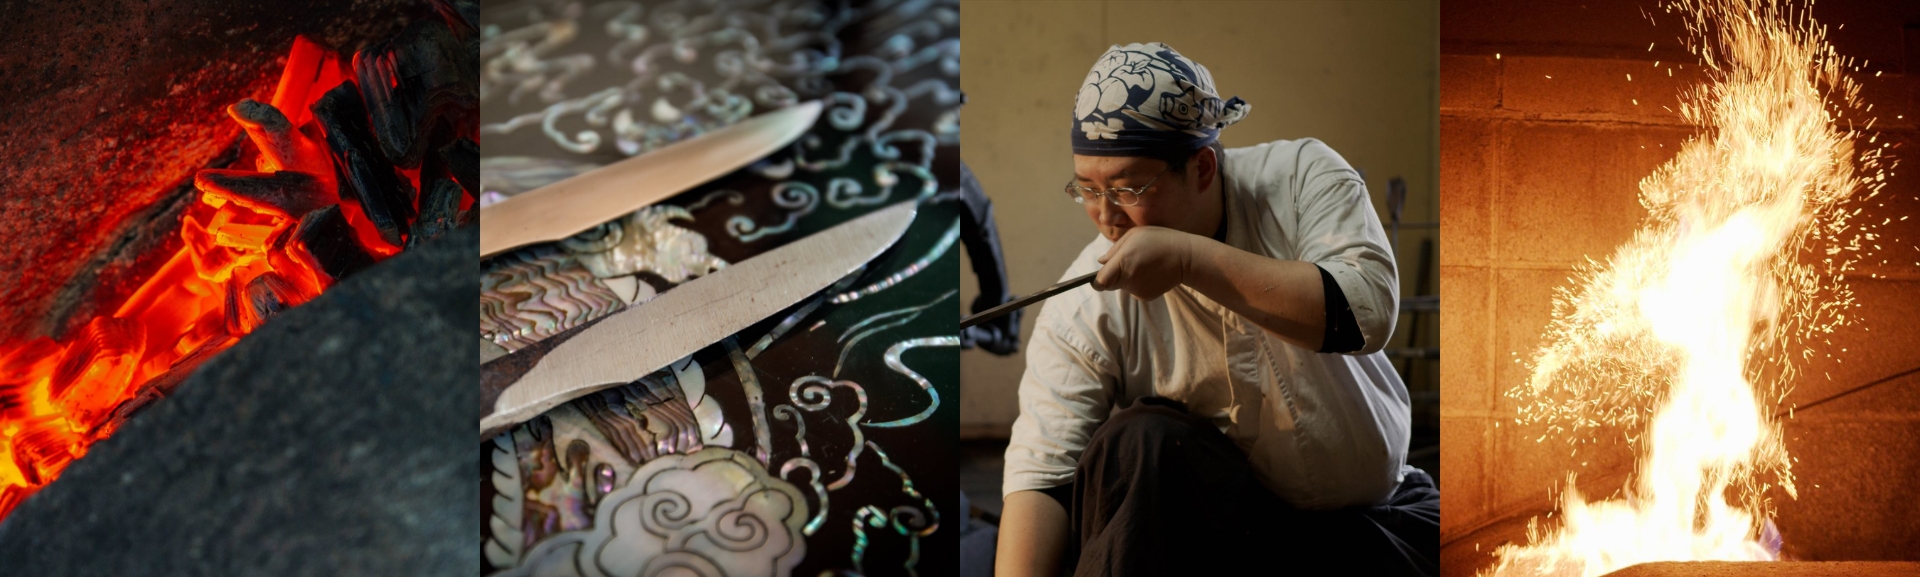 Katana knife making and workshop tour in Kyoto